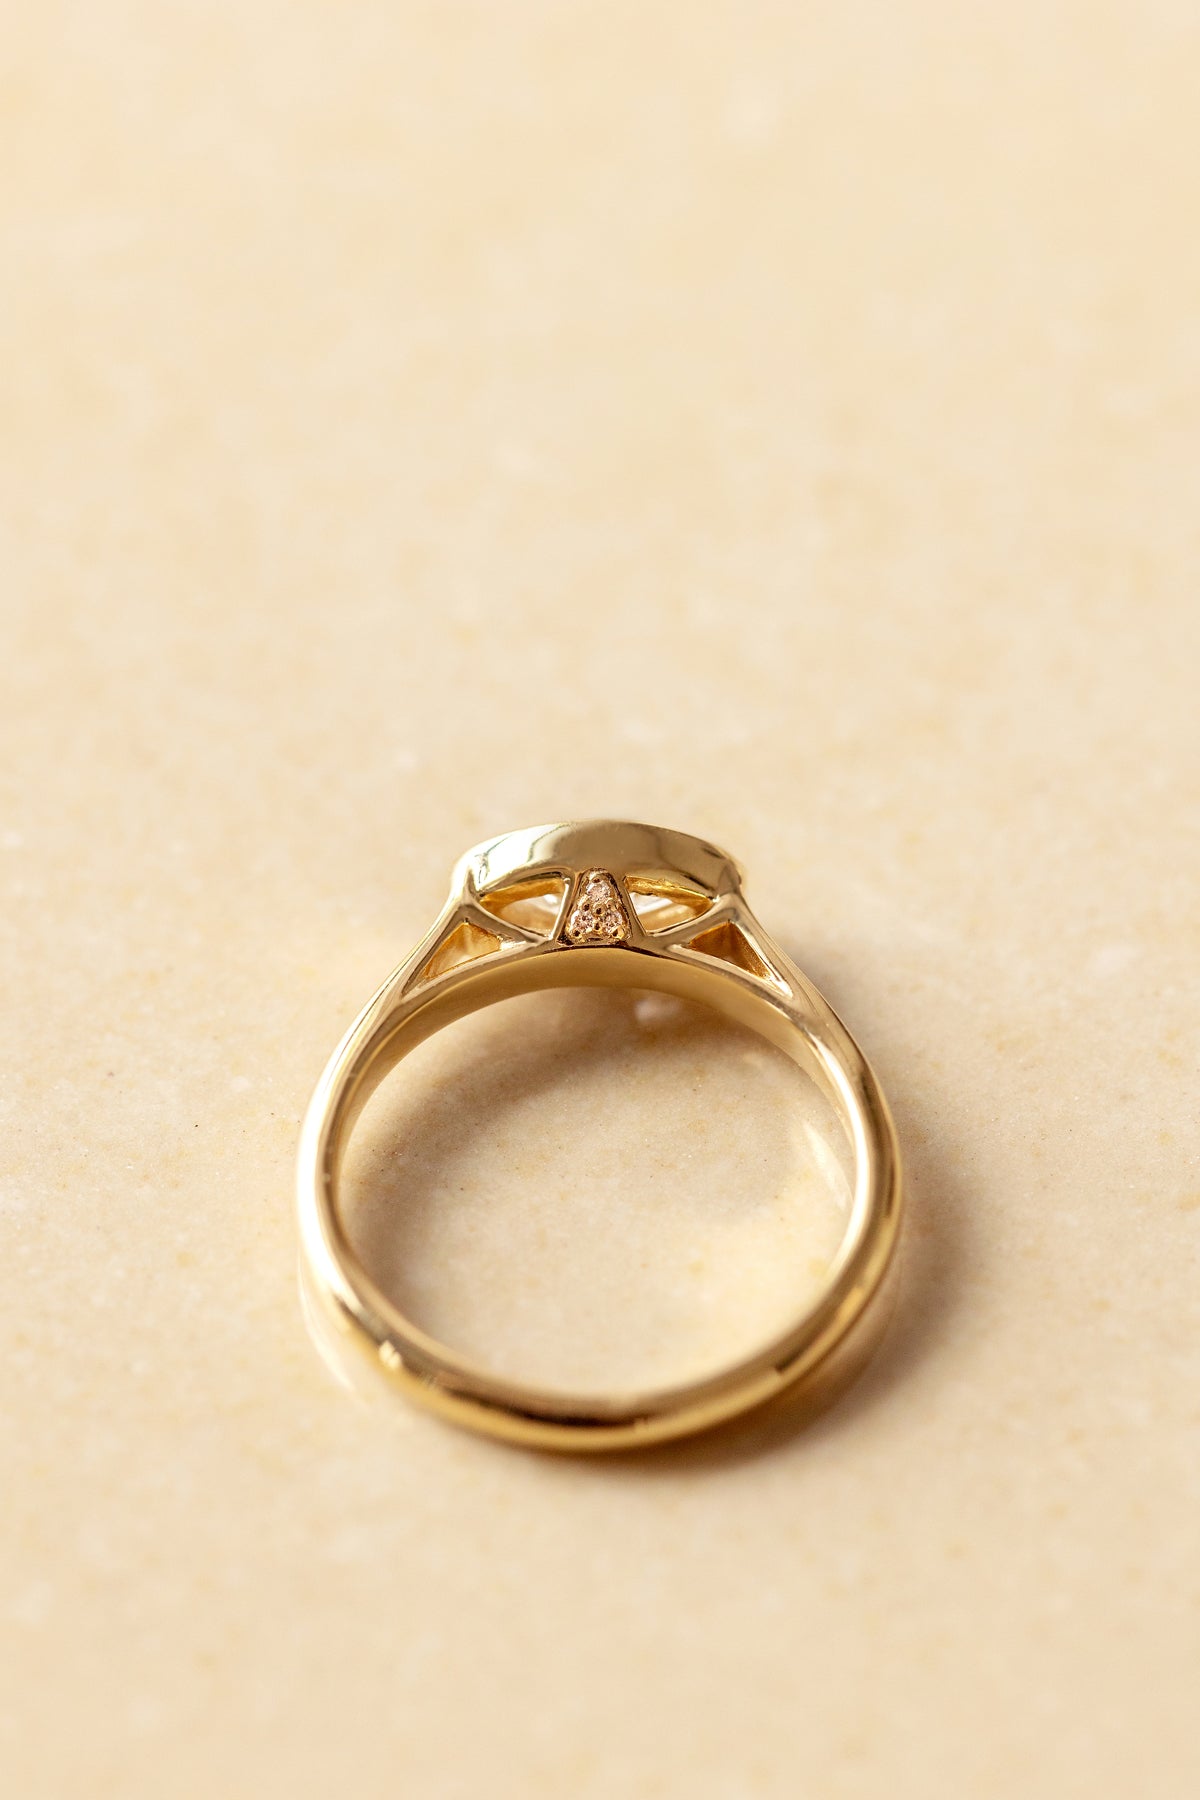 Marquis Diamond Engagement Ring